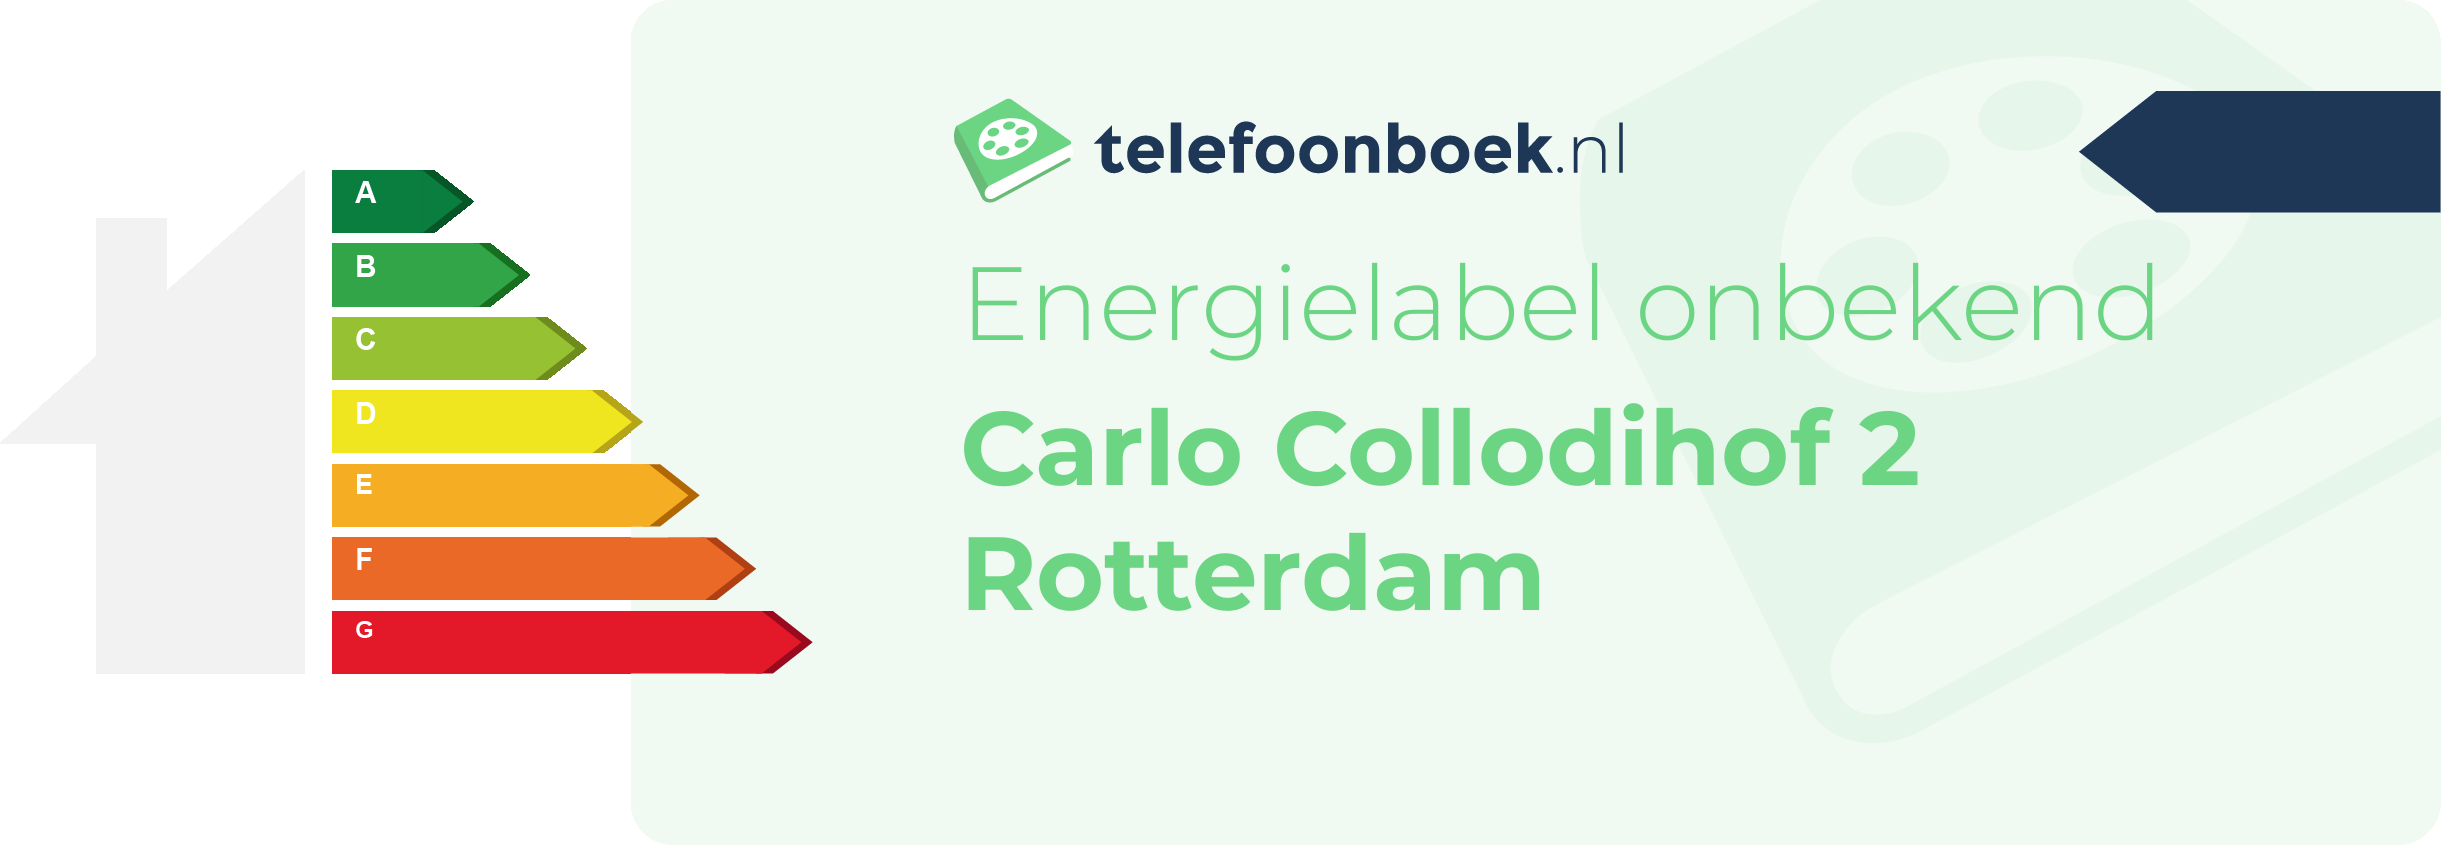 Energielabel Carlo Collodihof 2 Rotterdam